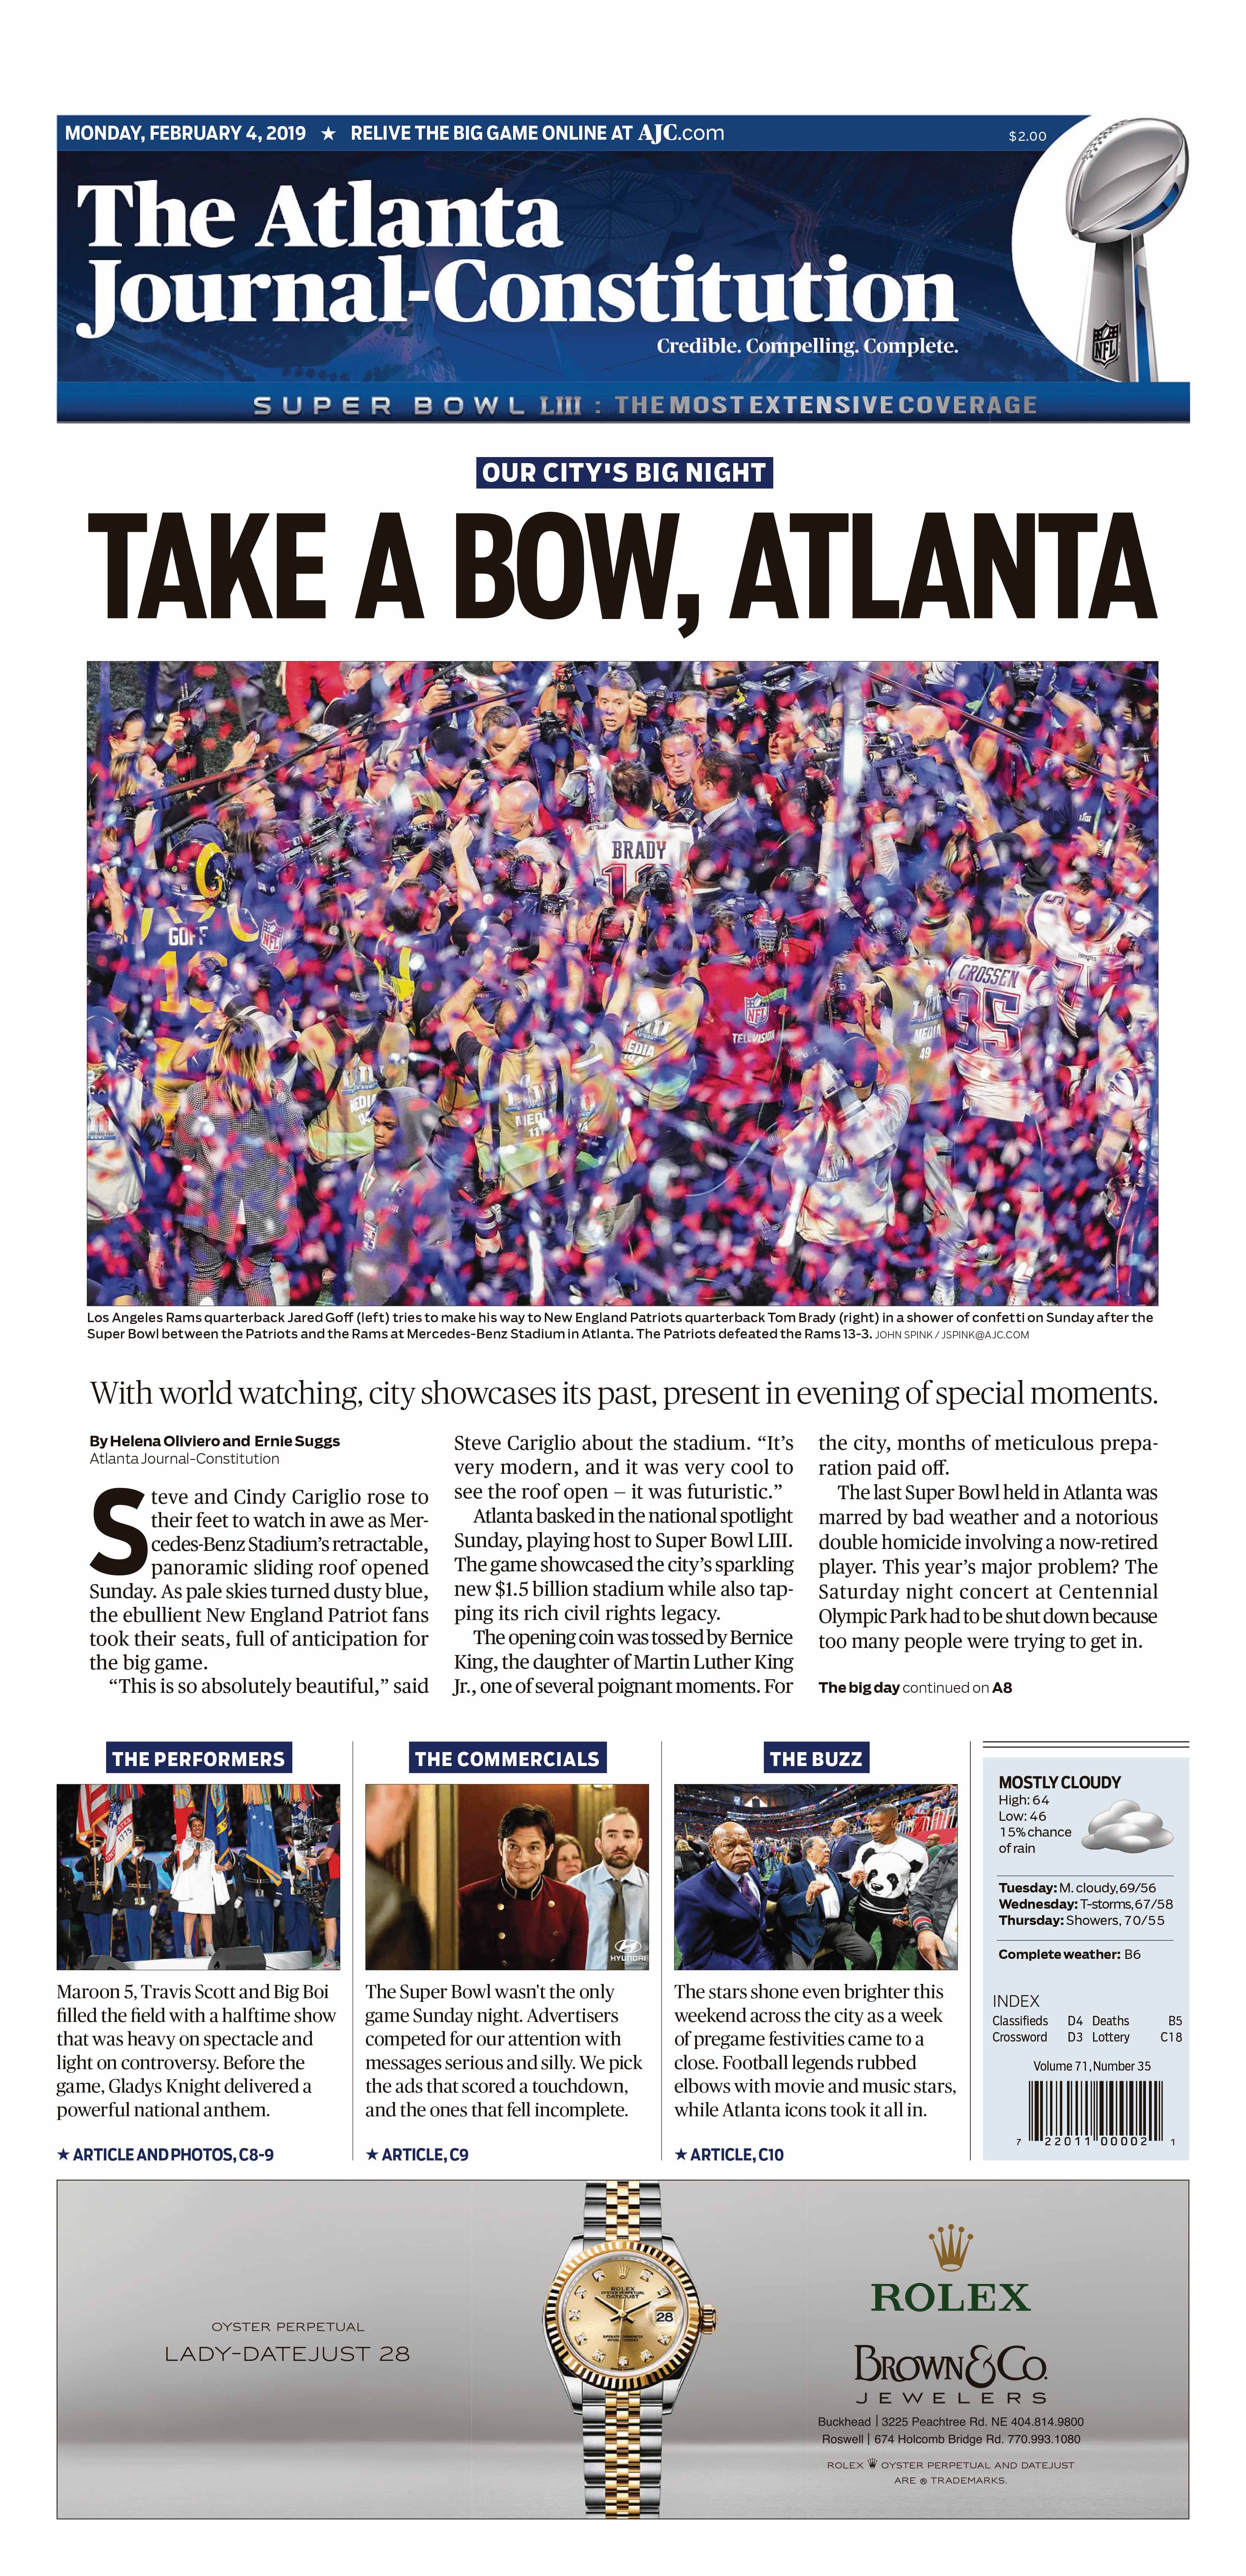 Atlanta Journal-Constitution Front Page - Super Bowl - John Spink Copyright Photo